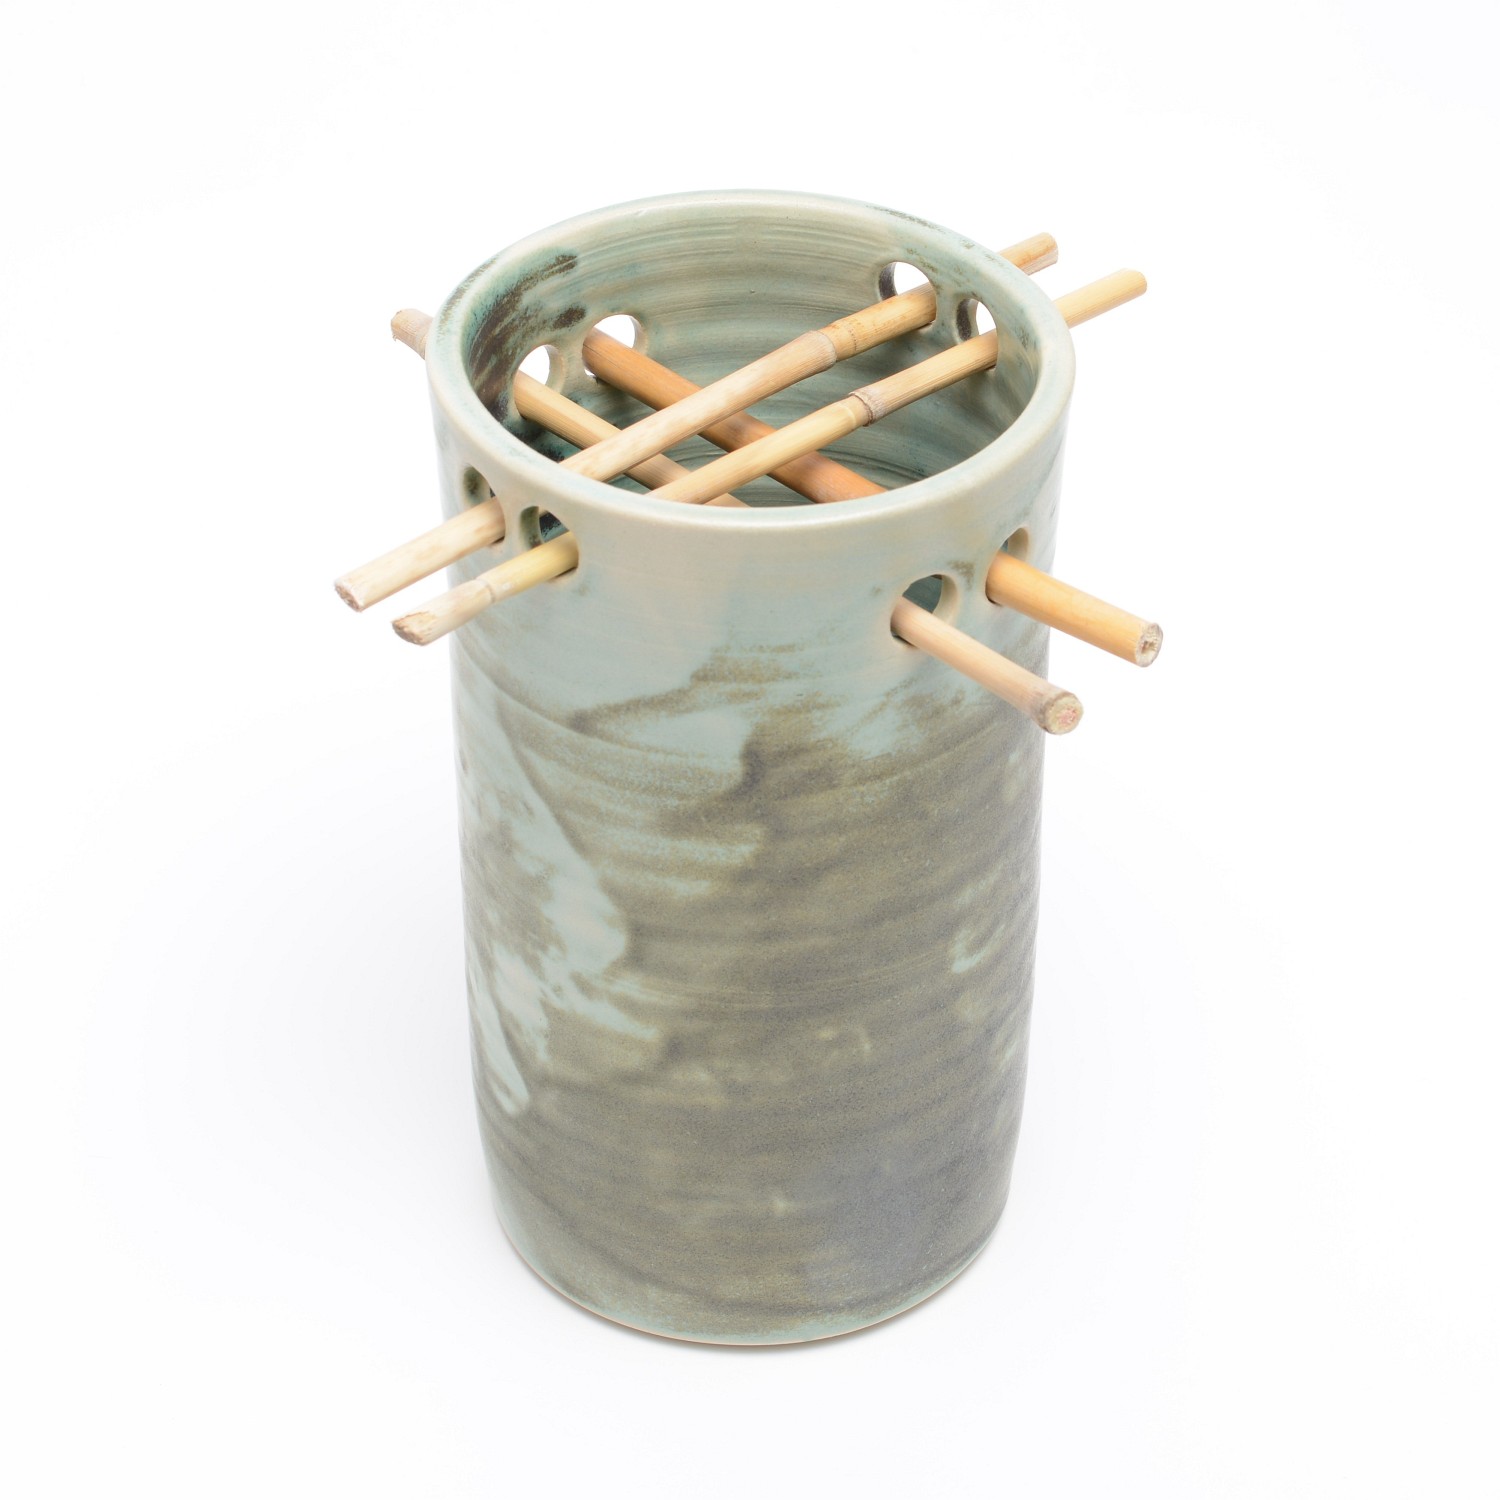 Zylindervase "Bambus" aus Keramik